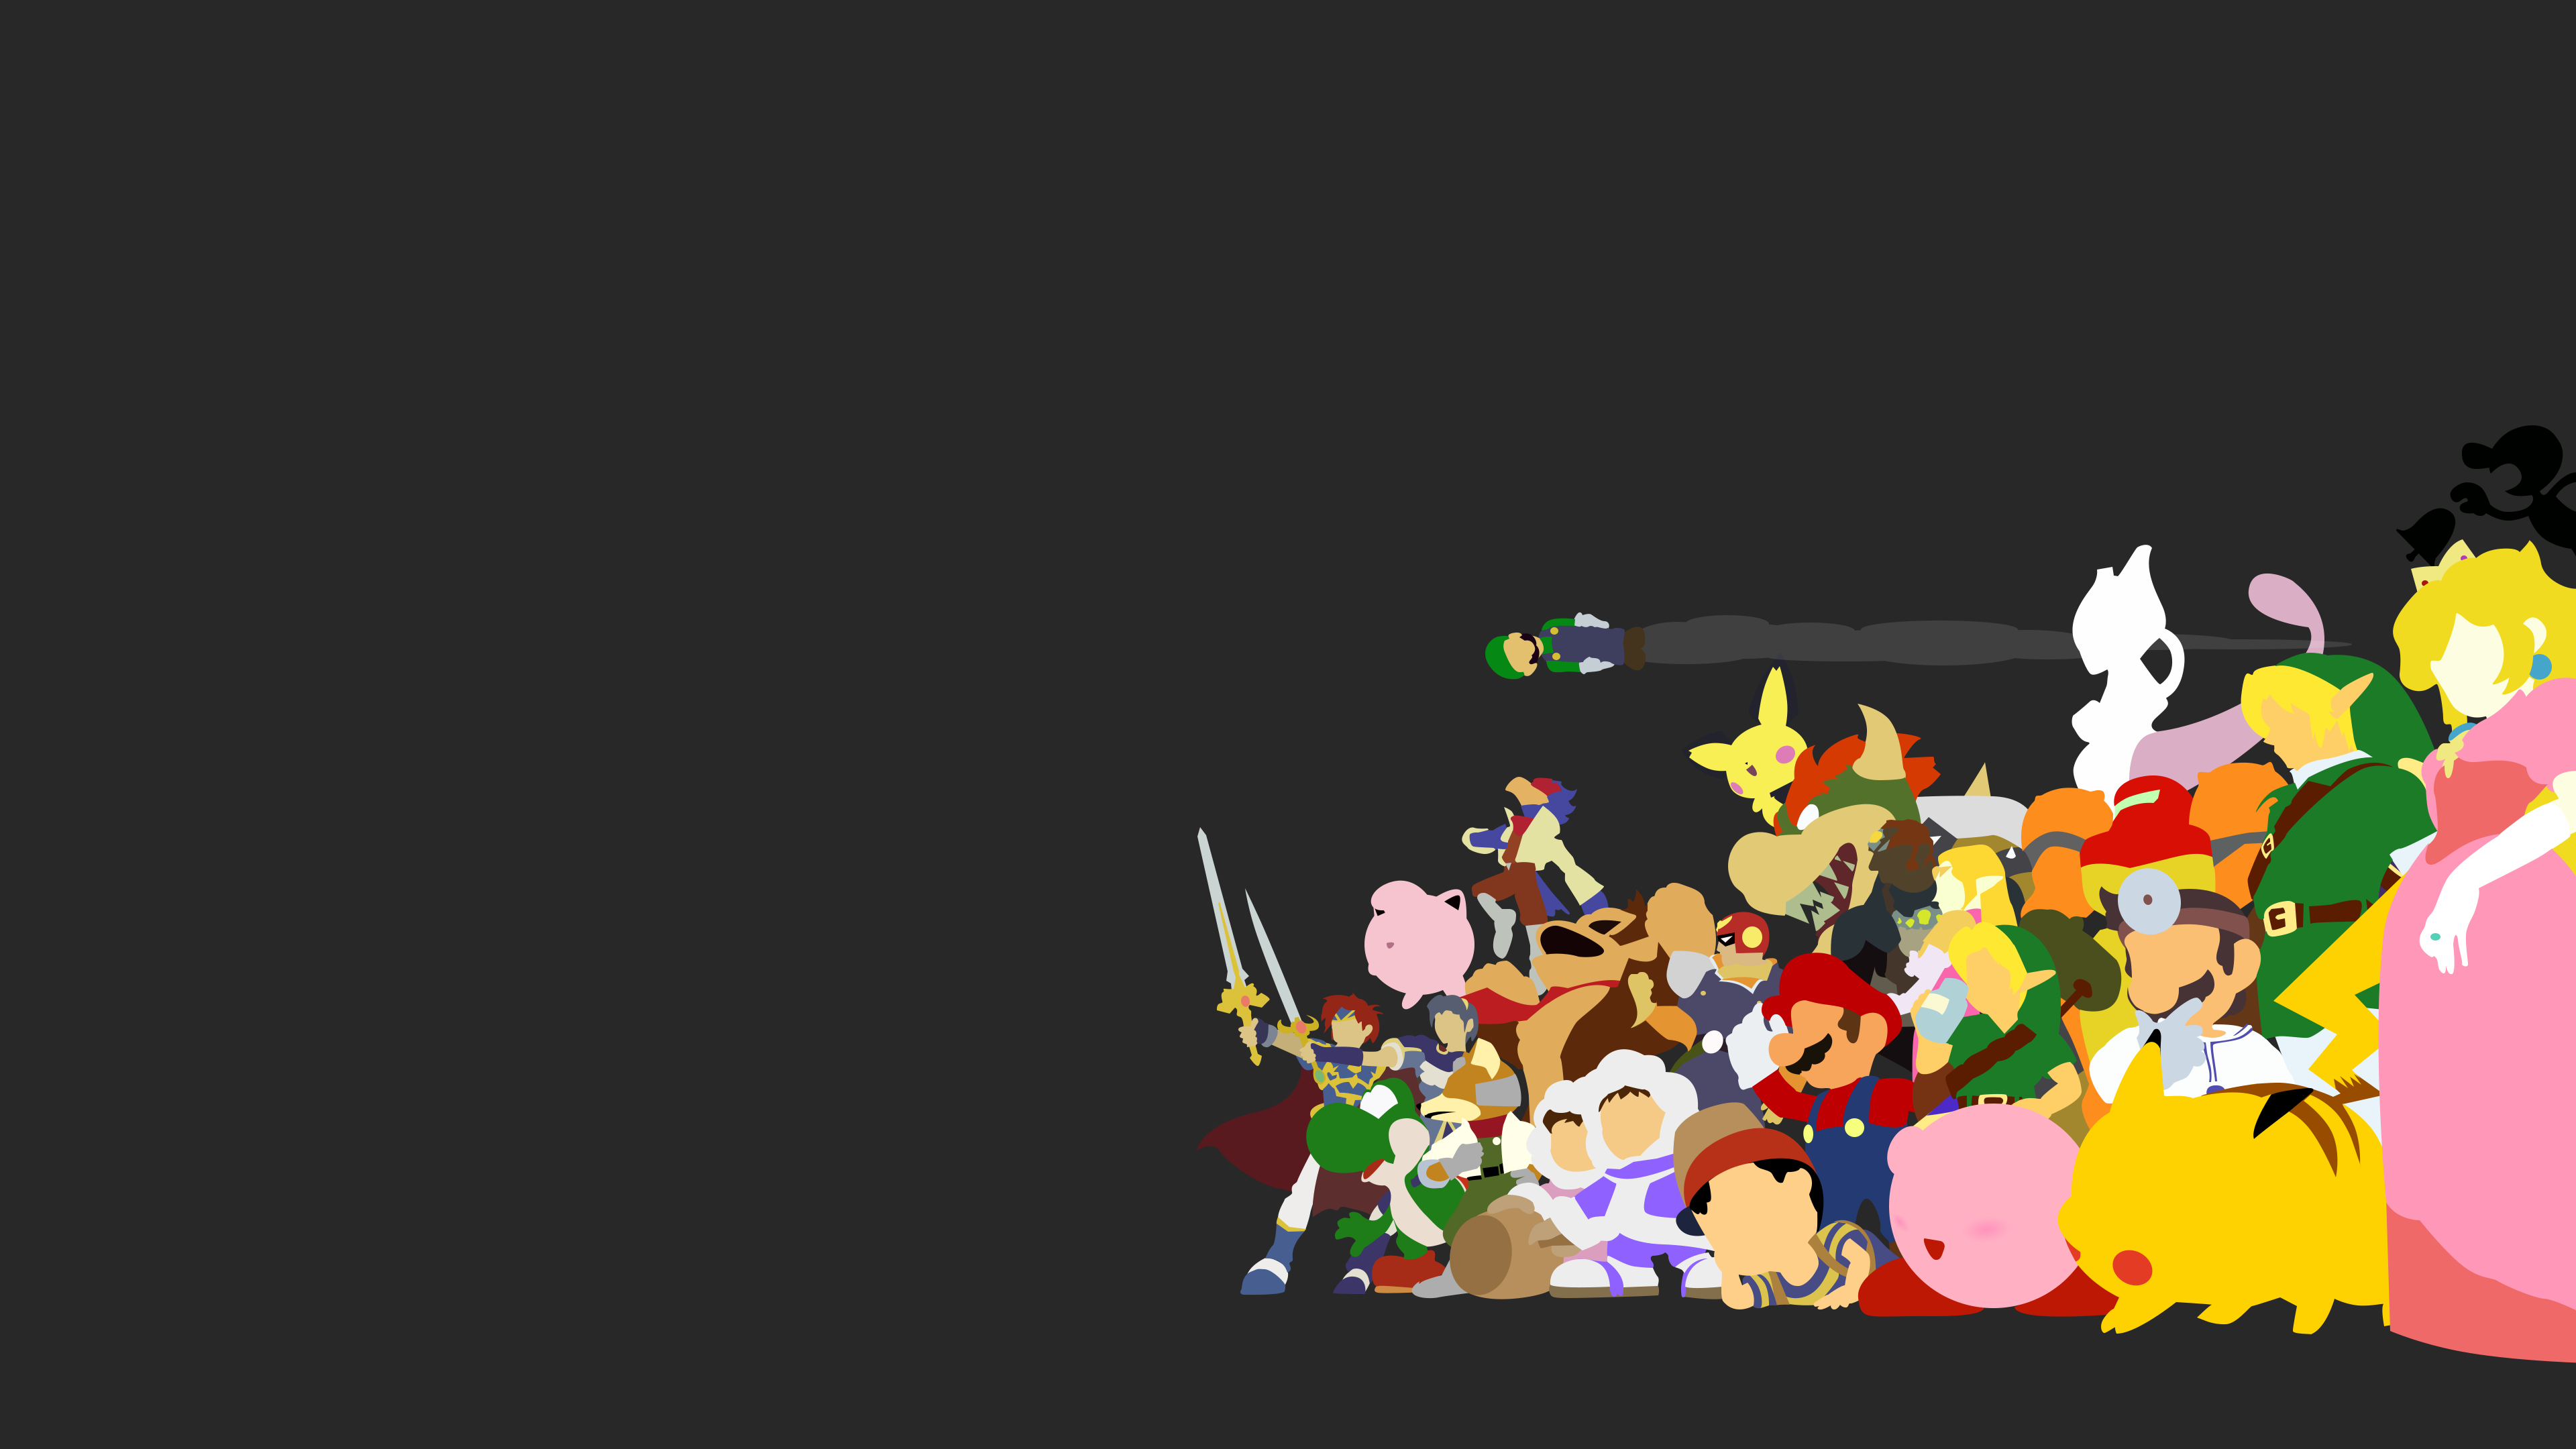 Smash Bros Desktop Background. Smash